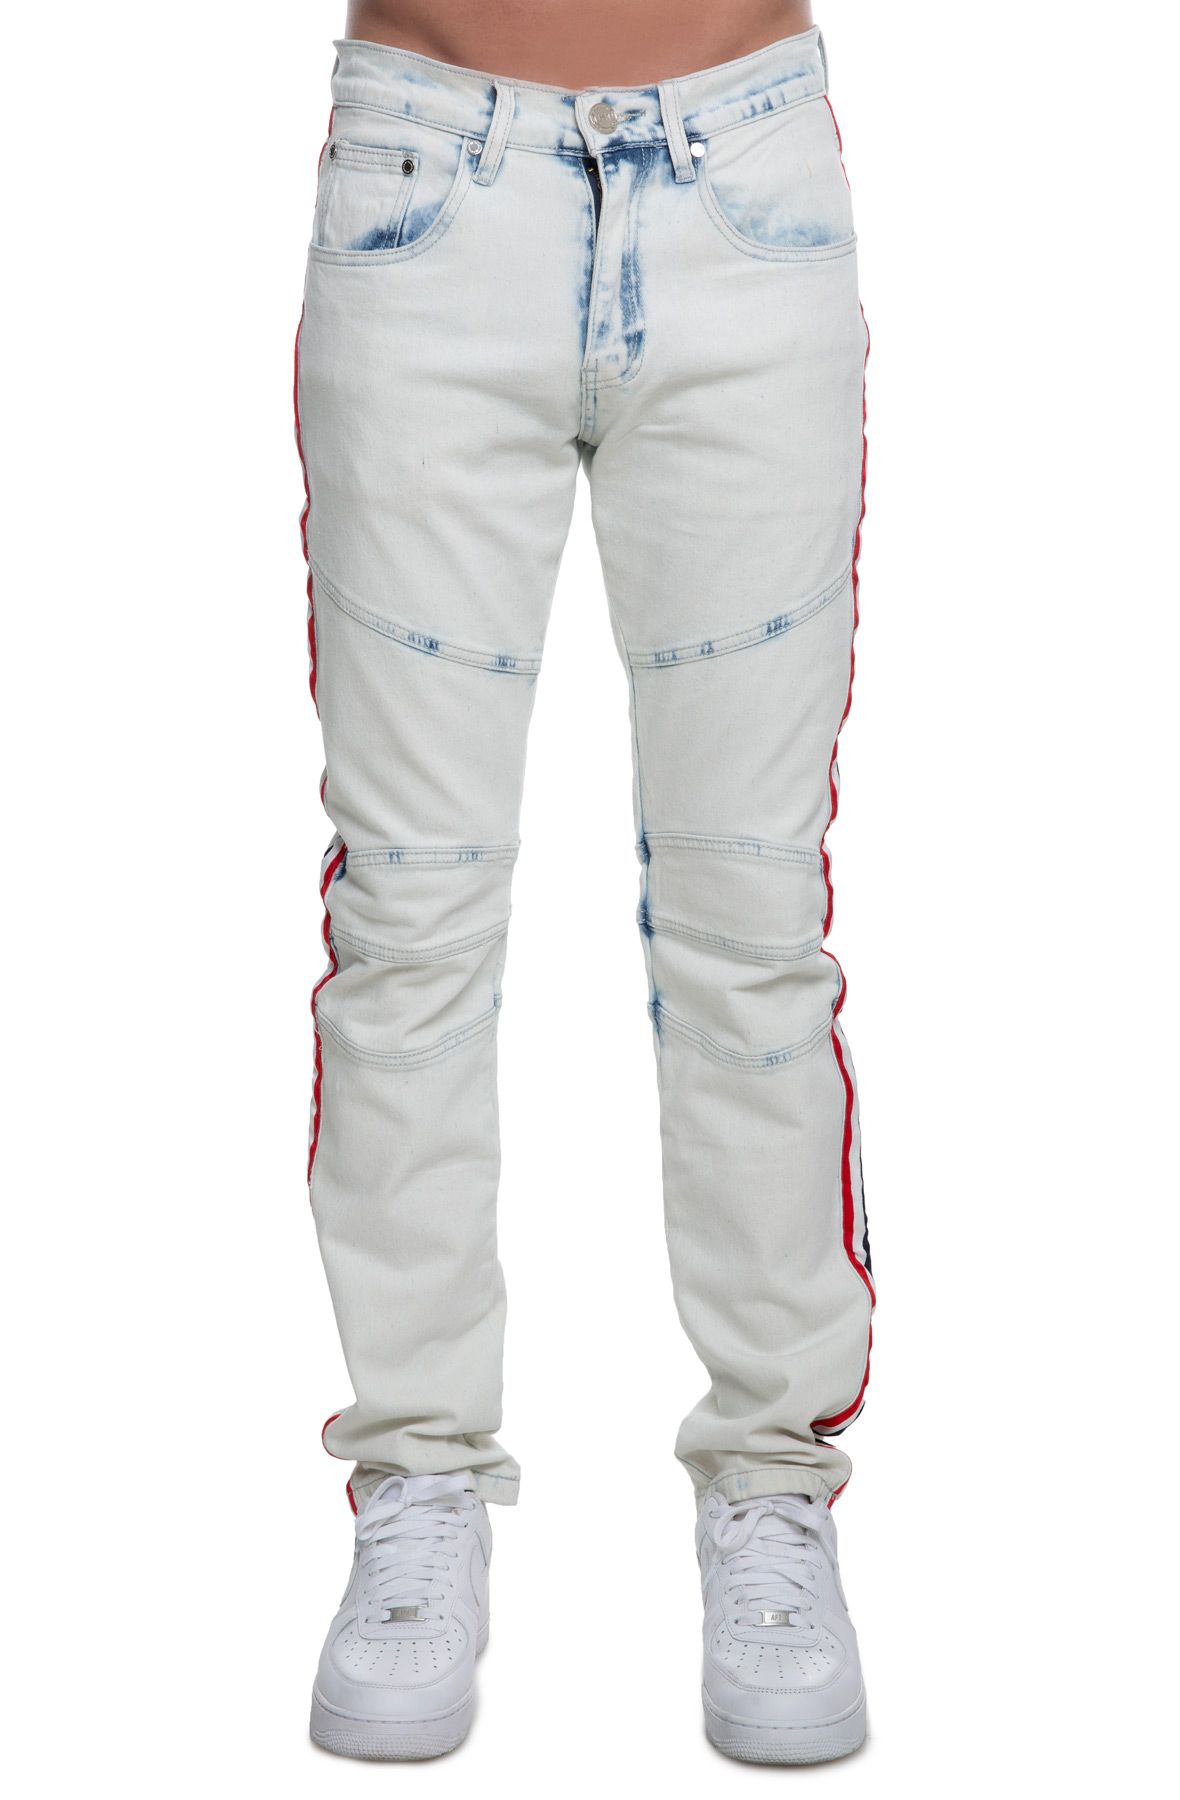 REASON Franklin Striped Jeans S1-205-400 - Shiekh